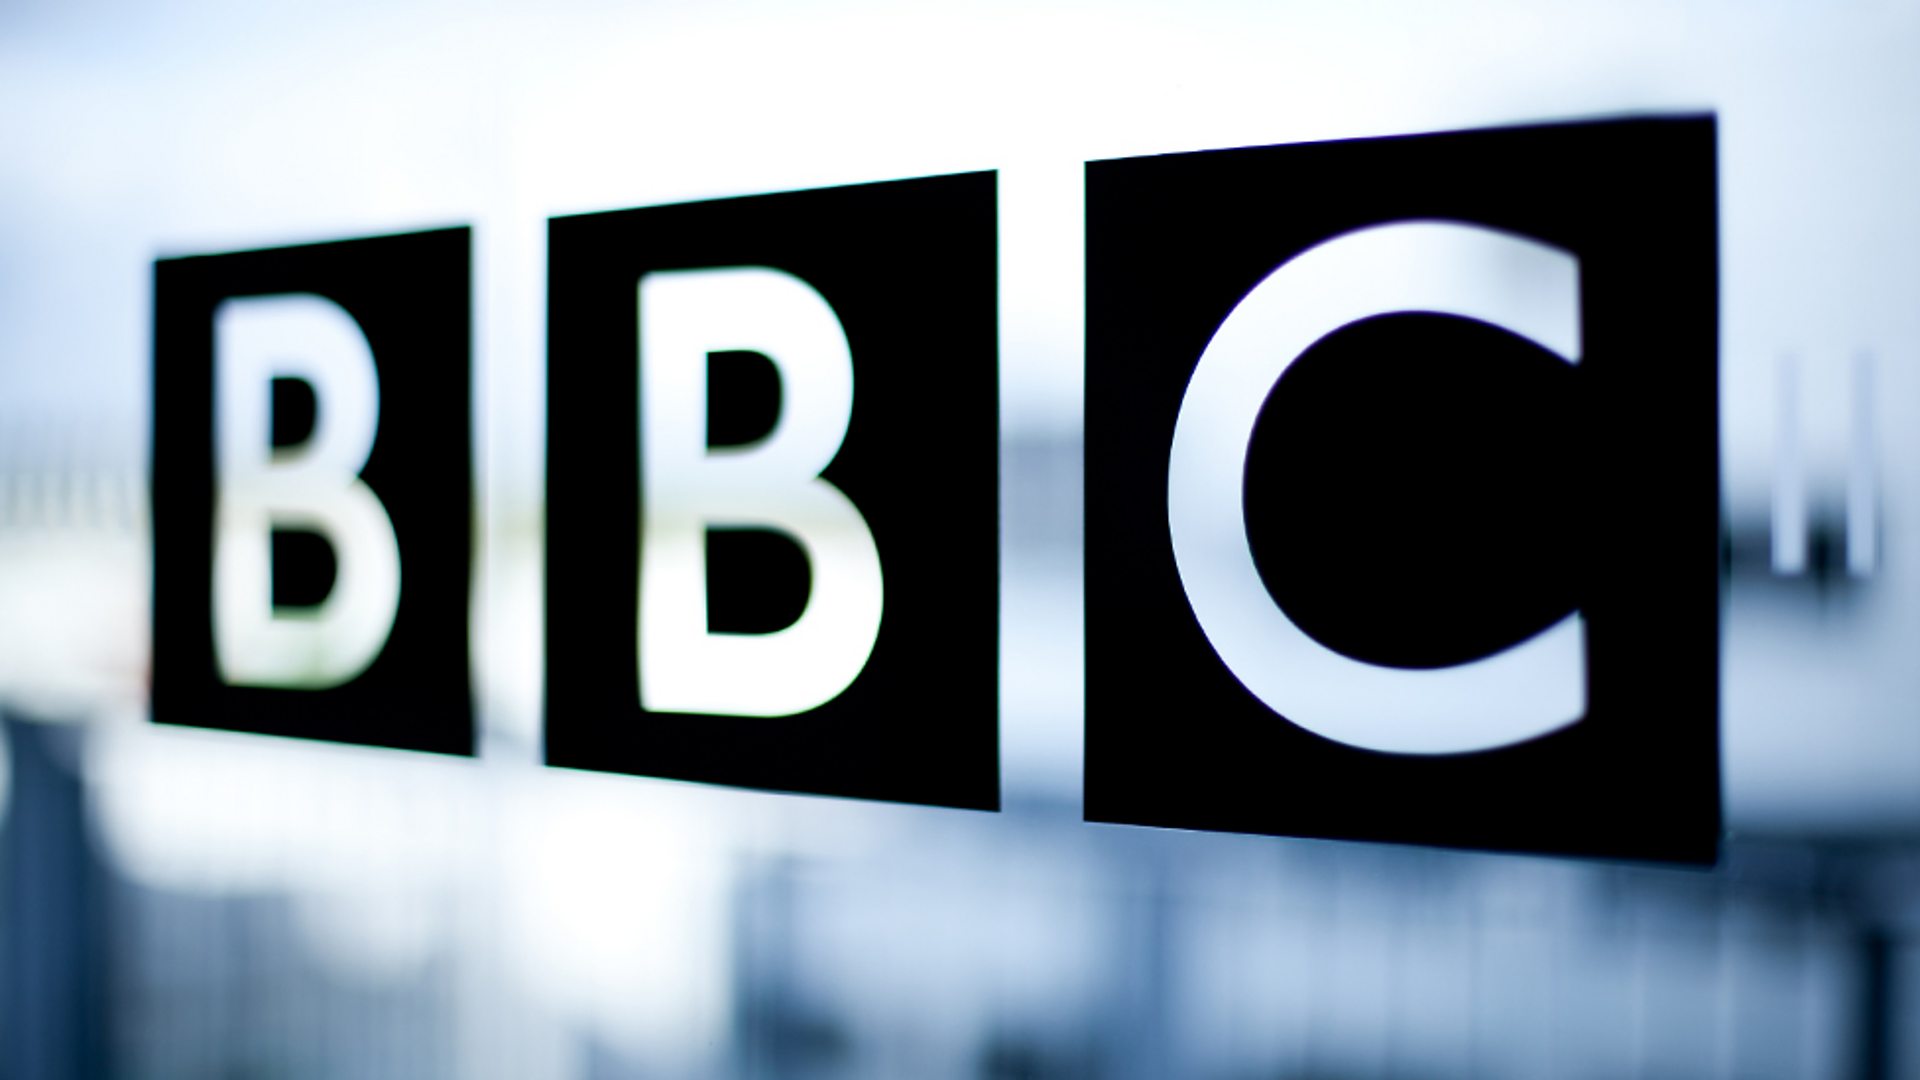 Bbc listen. Bbc би-би-си. Логотип би би си. Канал bbc. ВВС Телеканал.